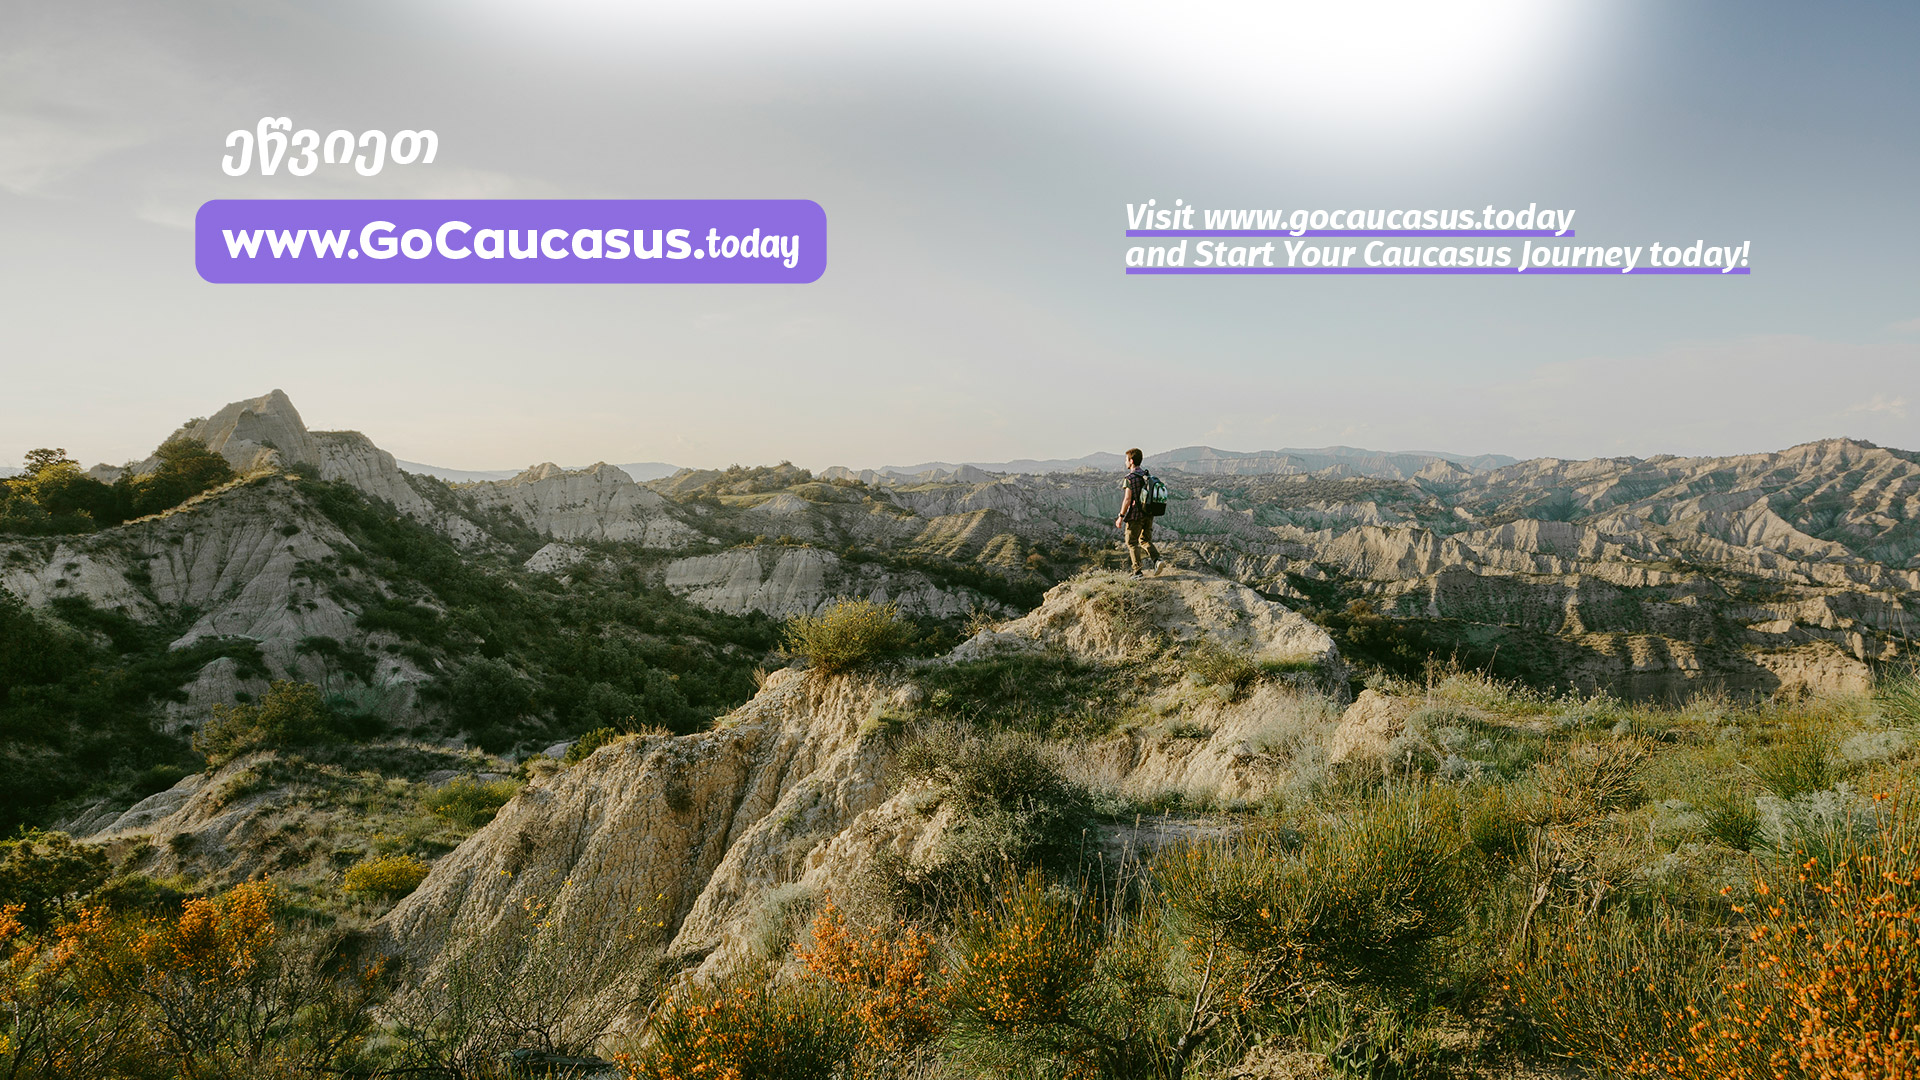 CENN Within the Digital Caucasus Project Launches a New Caucasus Tourism Destination Portal